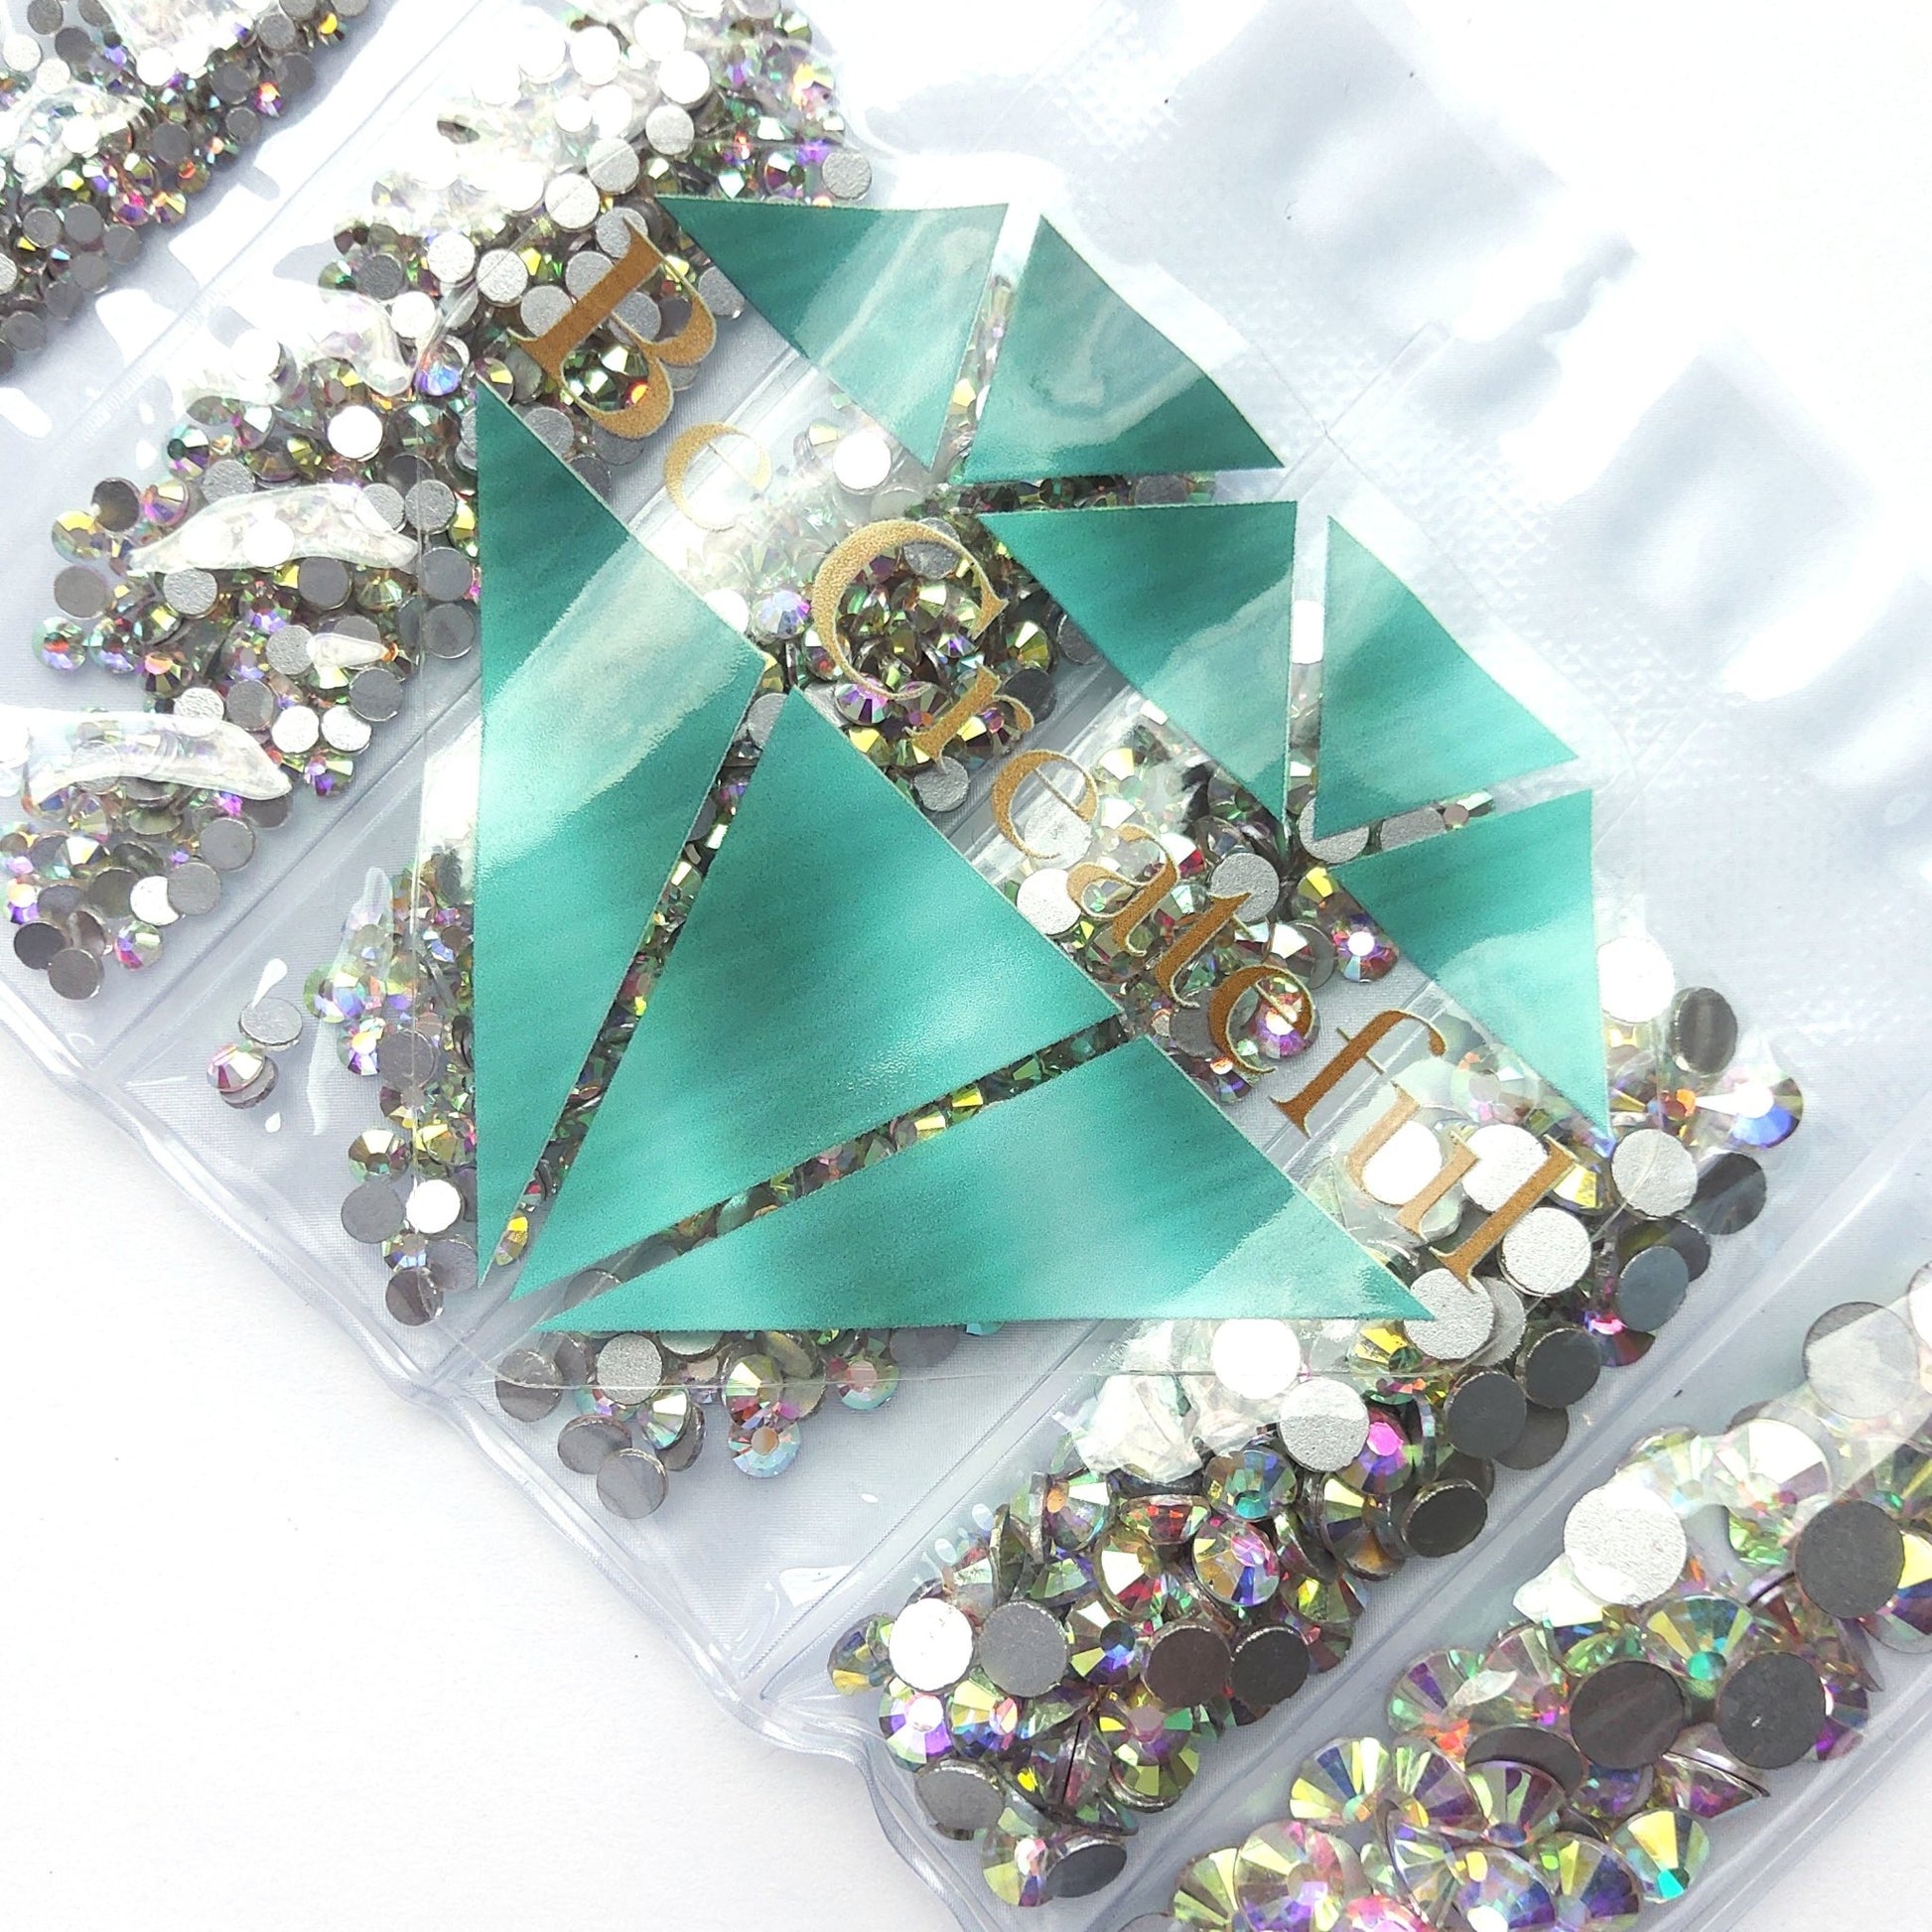 SS20 AB Crystal Diamond Rhinestones Flat Back Round Iridescent Crystals  Beads